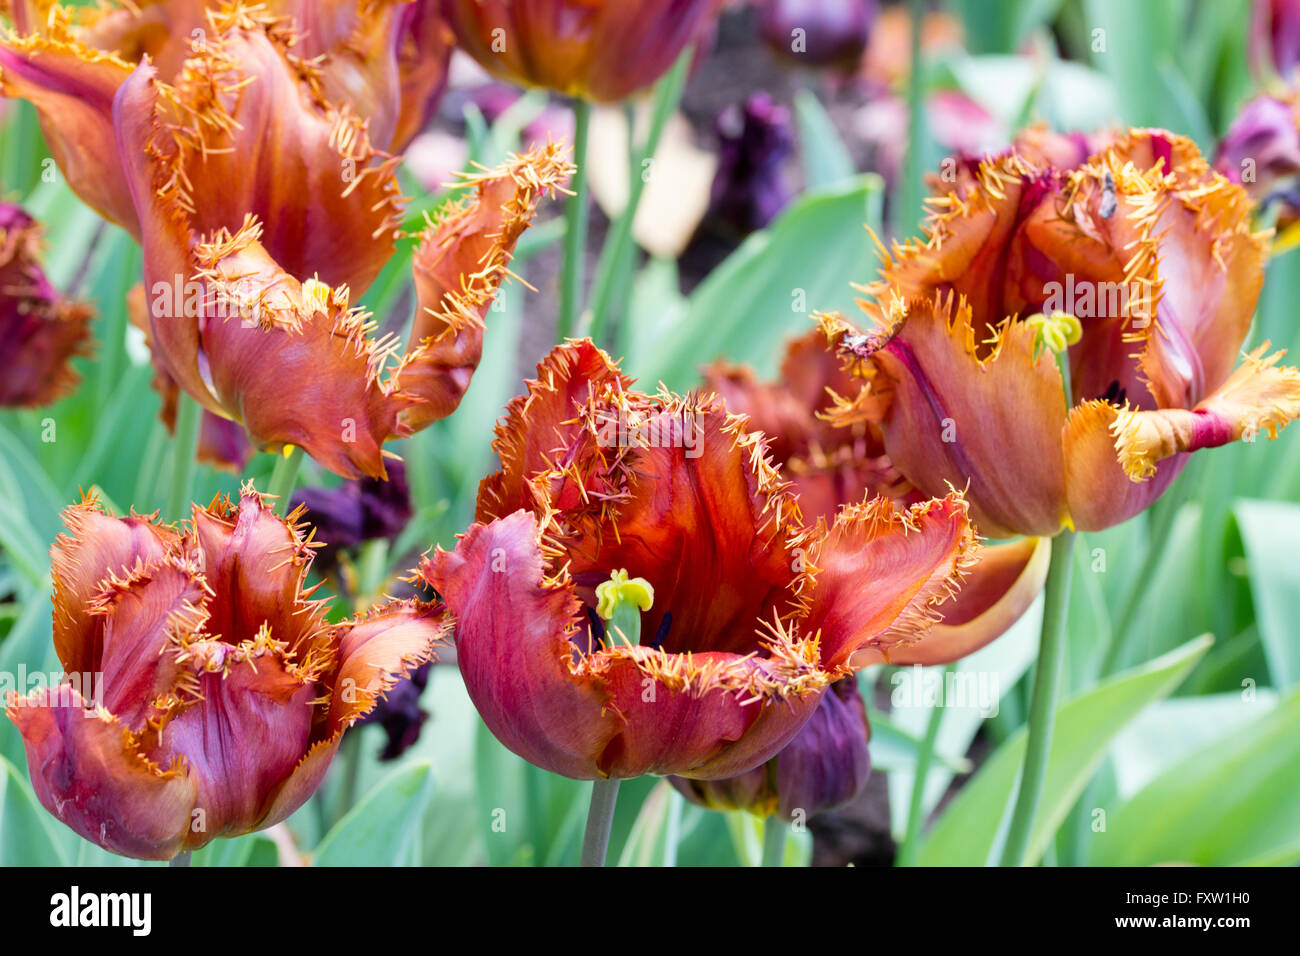 Fringed Tulip, Tulipa 'FANCY FRILLS', at the Keukenhof Gardens in